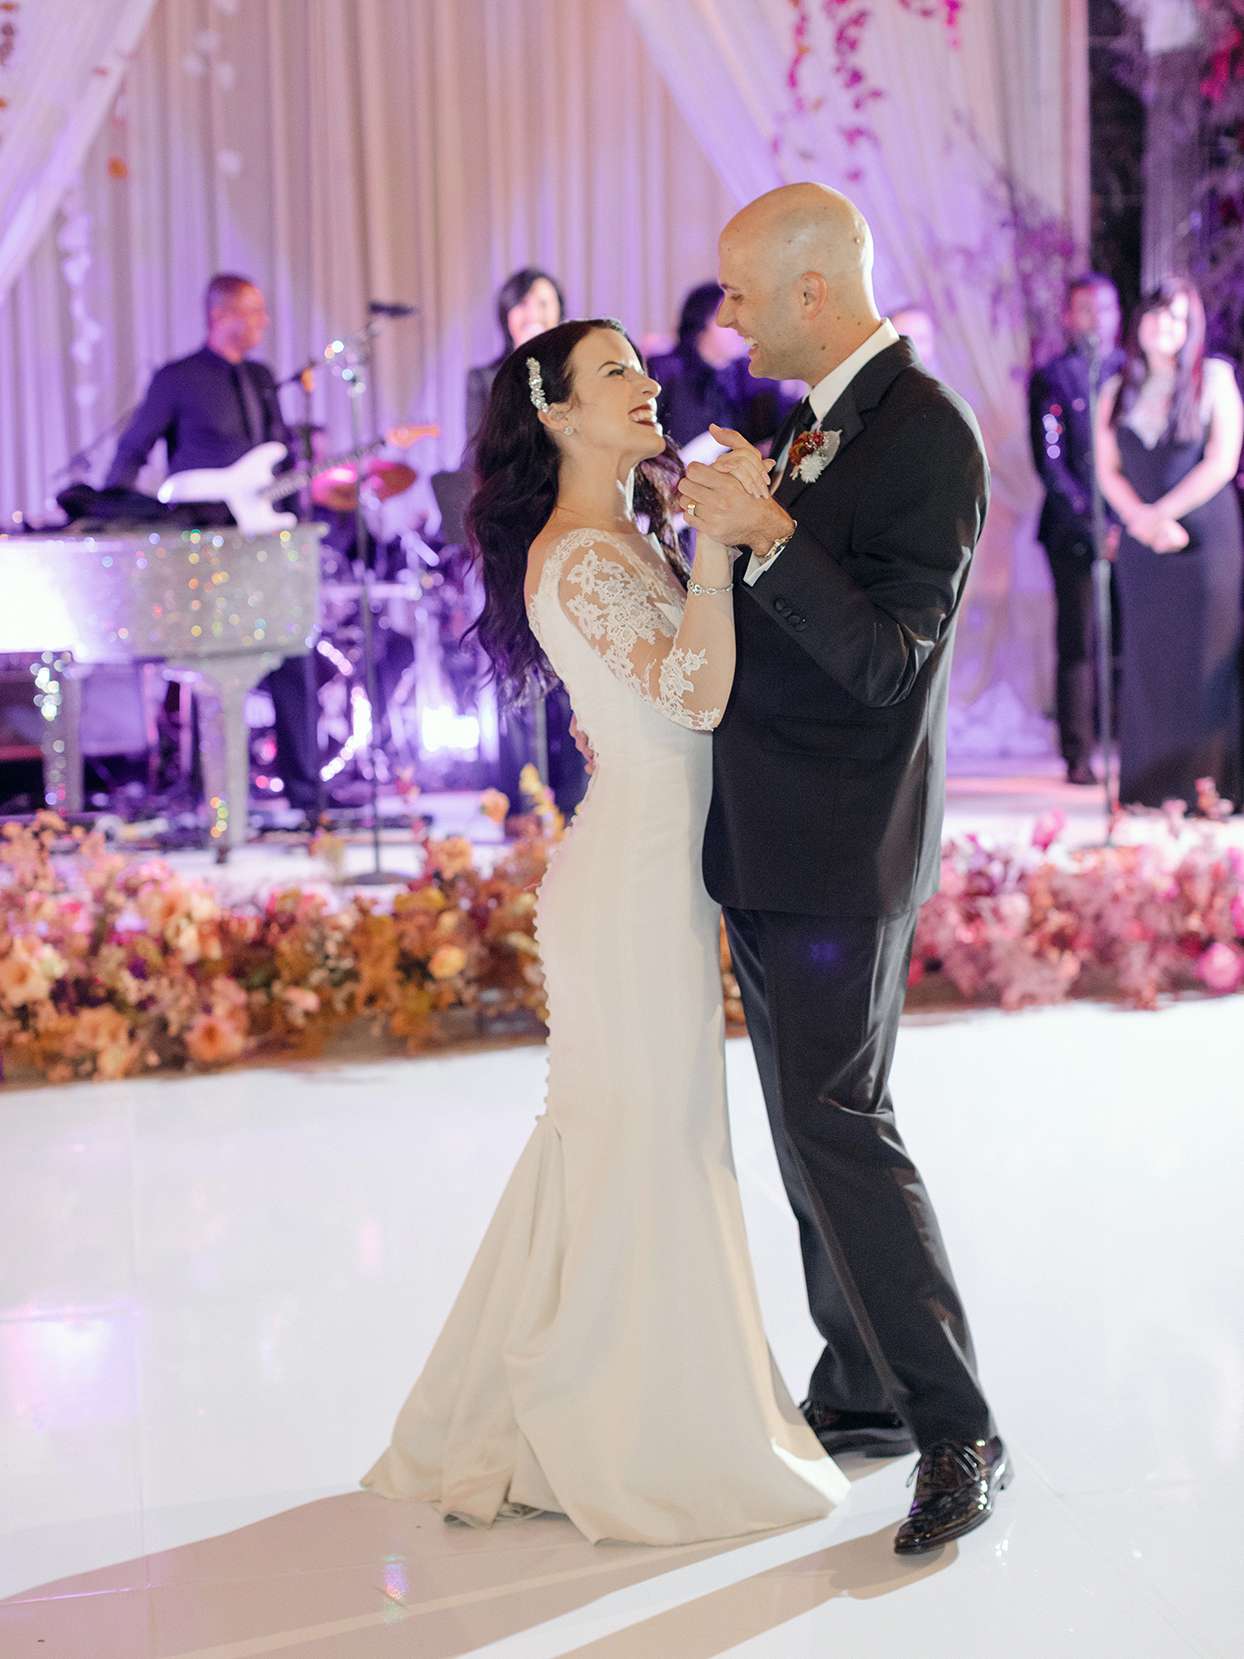 wedding couple first dance in ballroom under purple lights